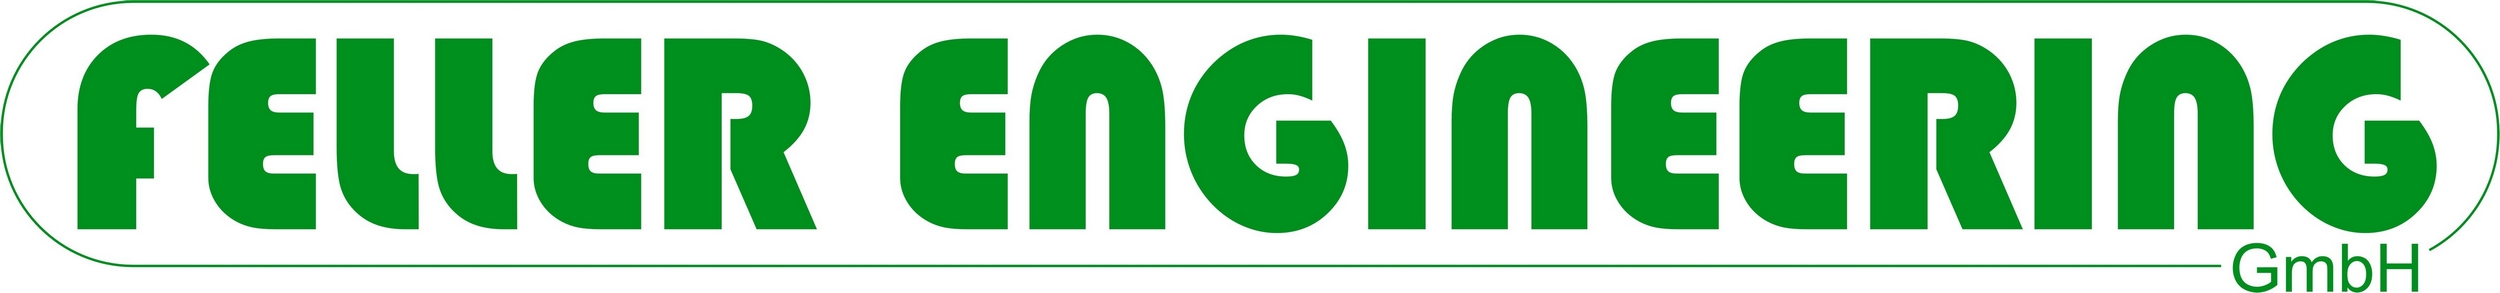 Feller Engineering GmbH_logo